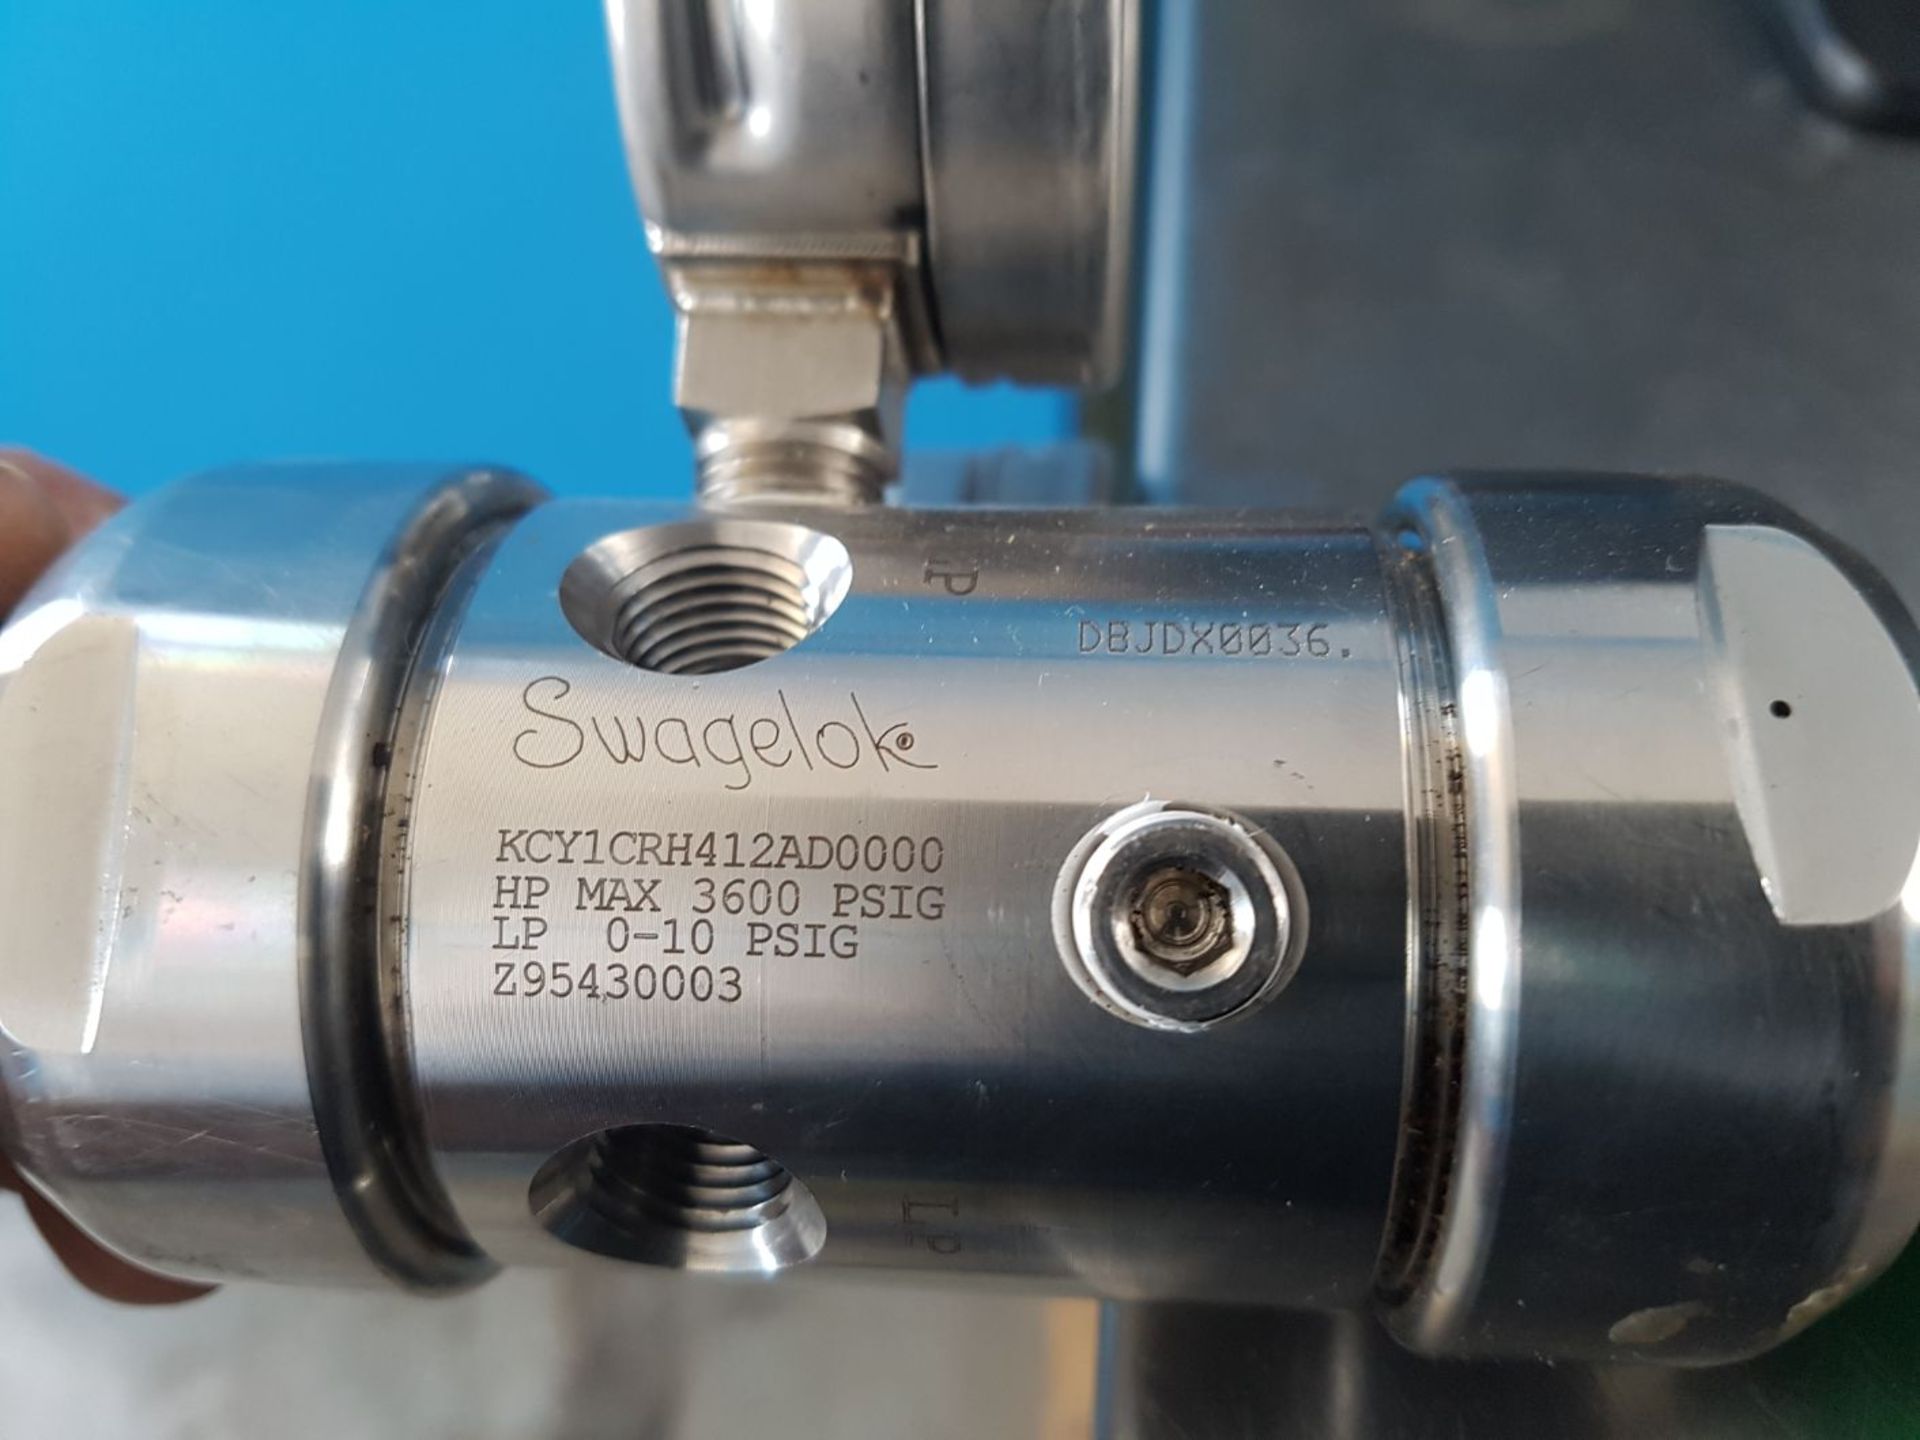 Swagelok stainless steel 2 stage regulator